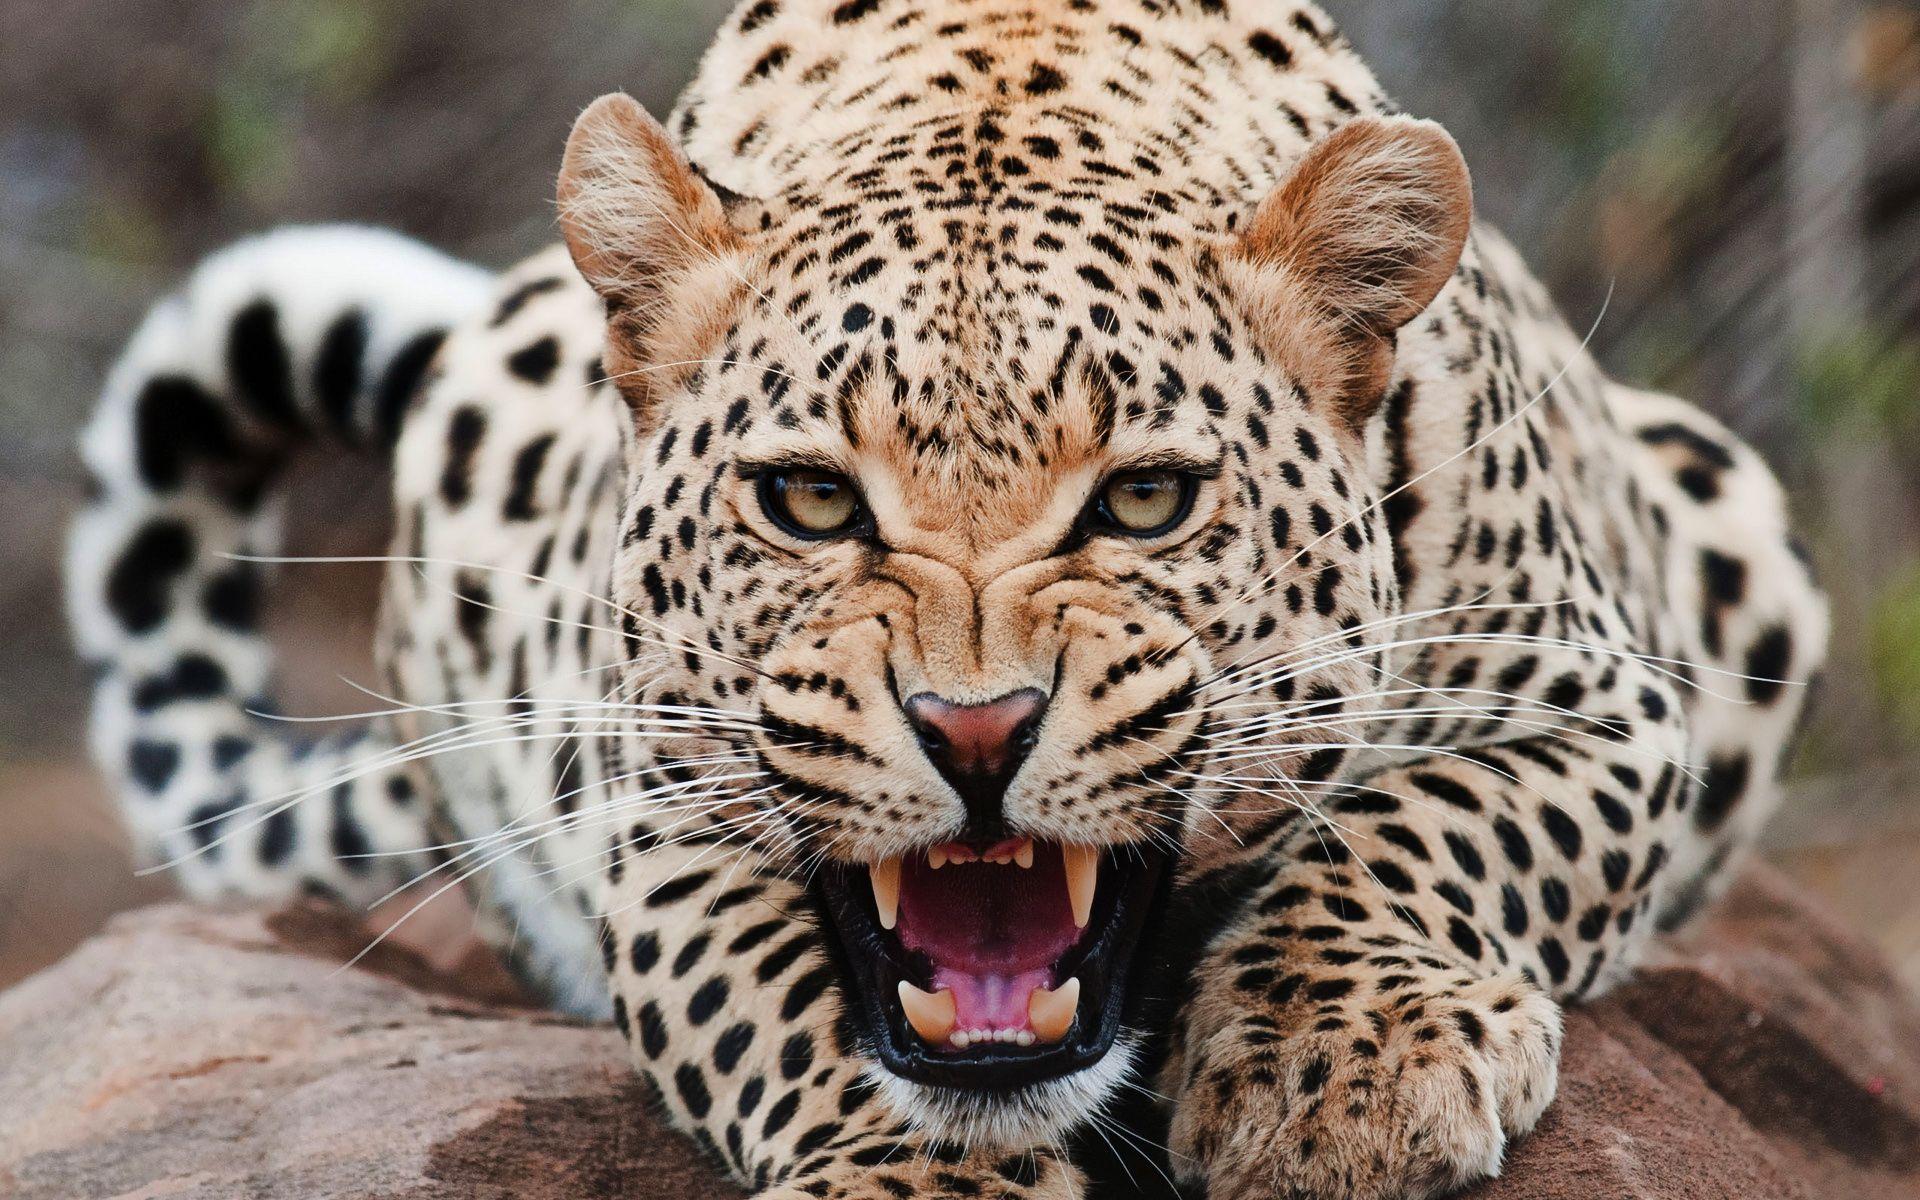 Jaguar Animal Wallpaper, High Quality Pics of Jaguar Animal